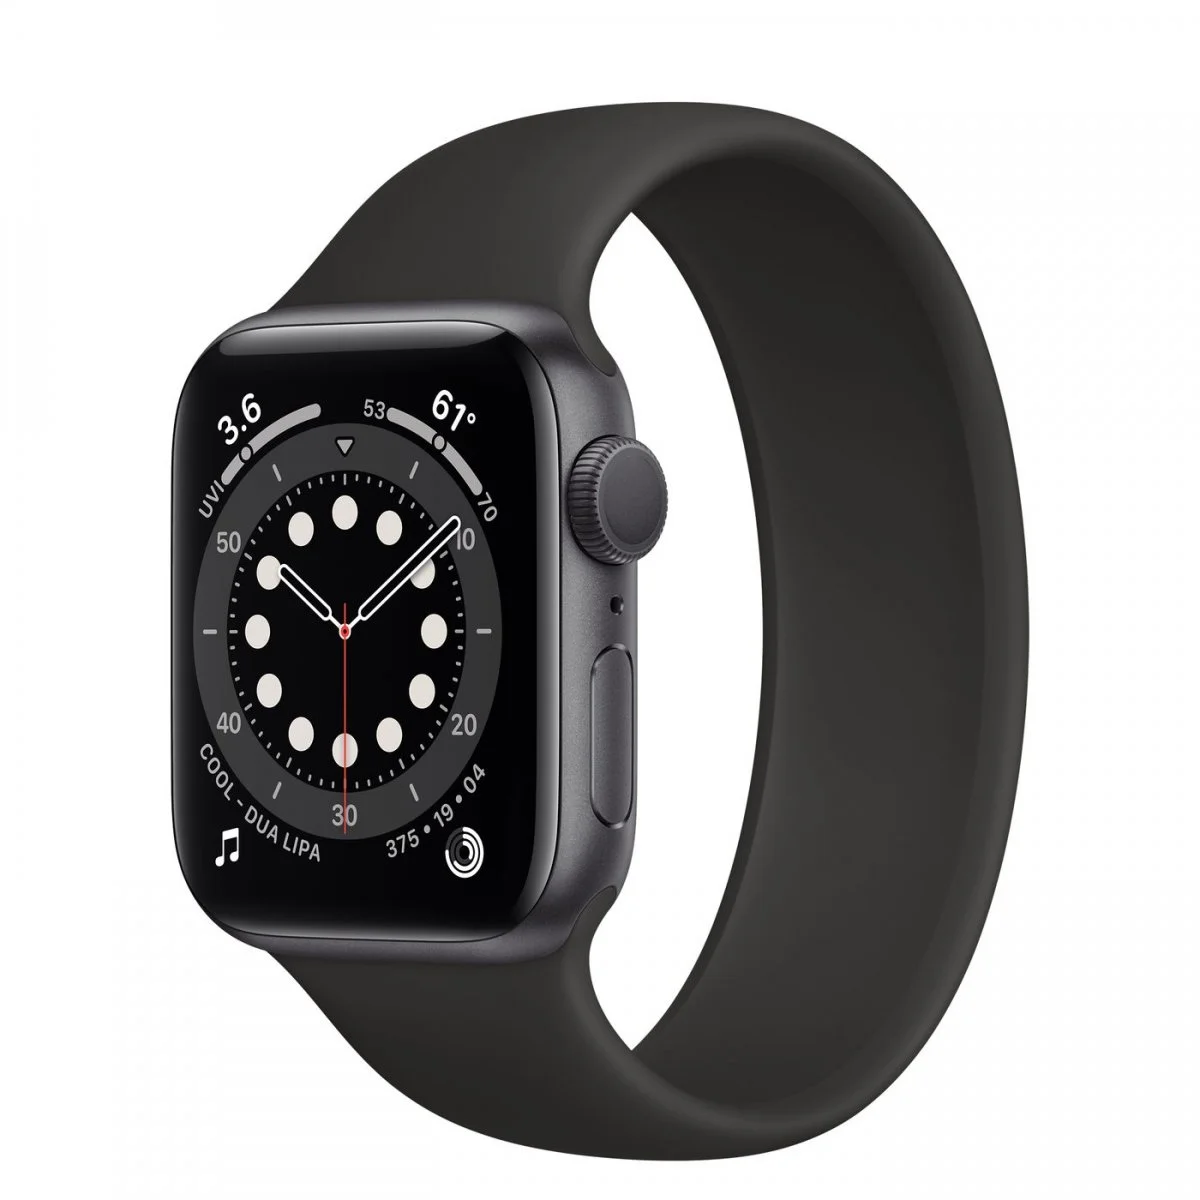 Řemínek iMore Solo Loop Apple Watch Series 1/2/3 42mm - Černá (M)